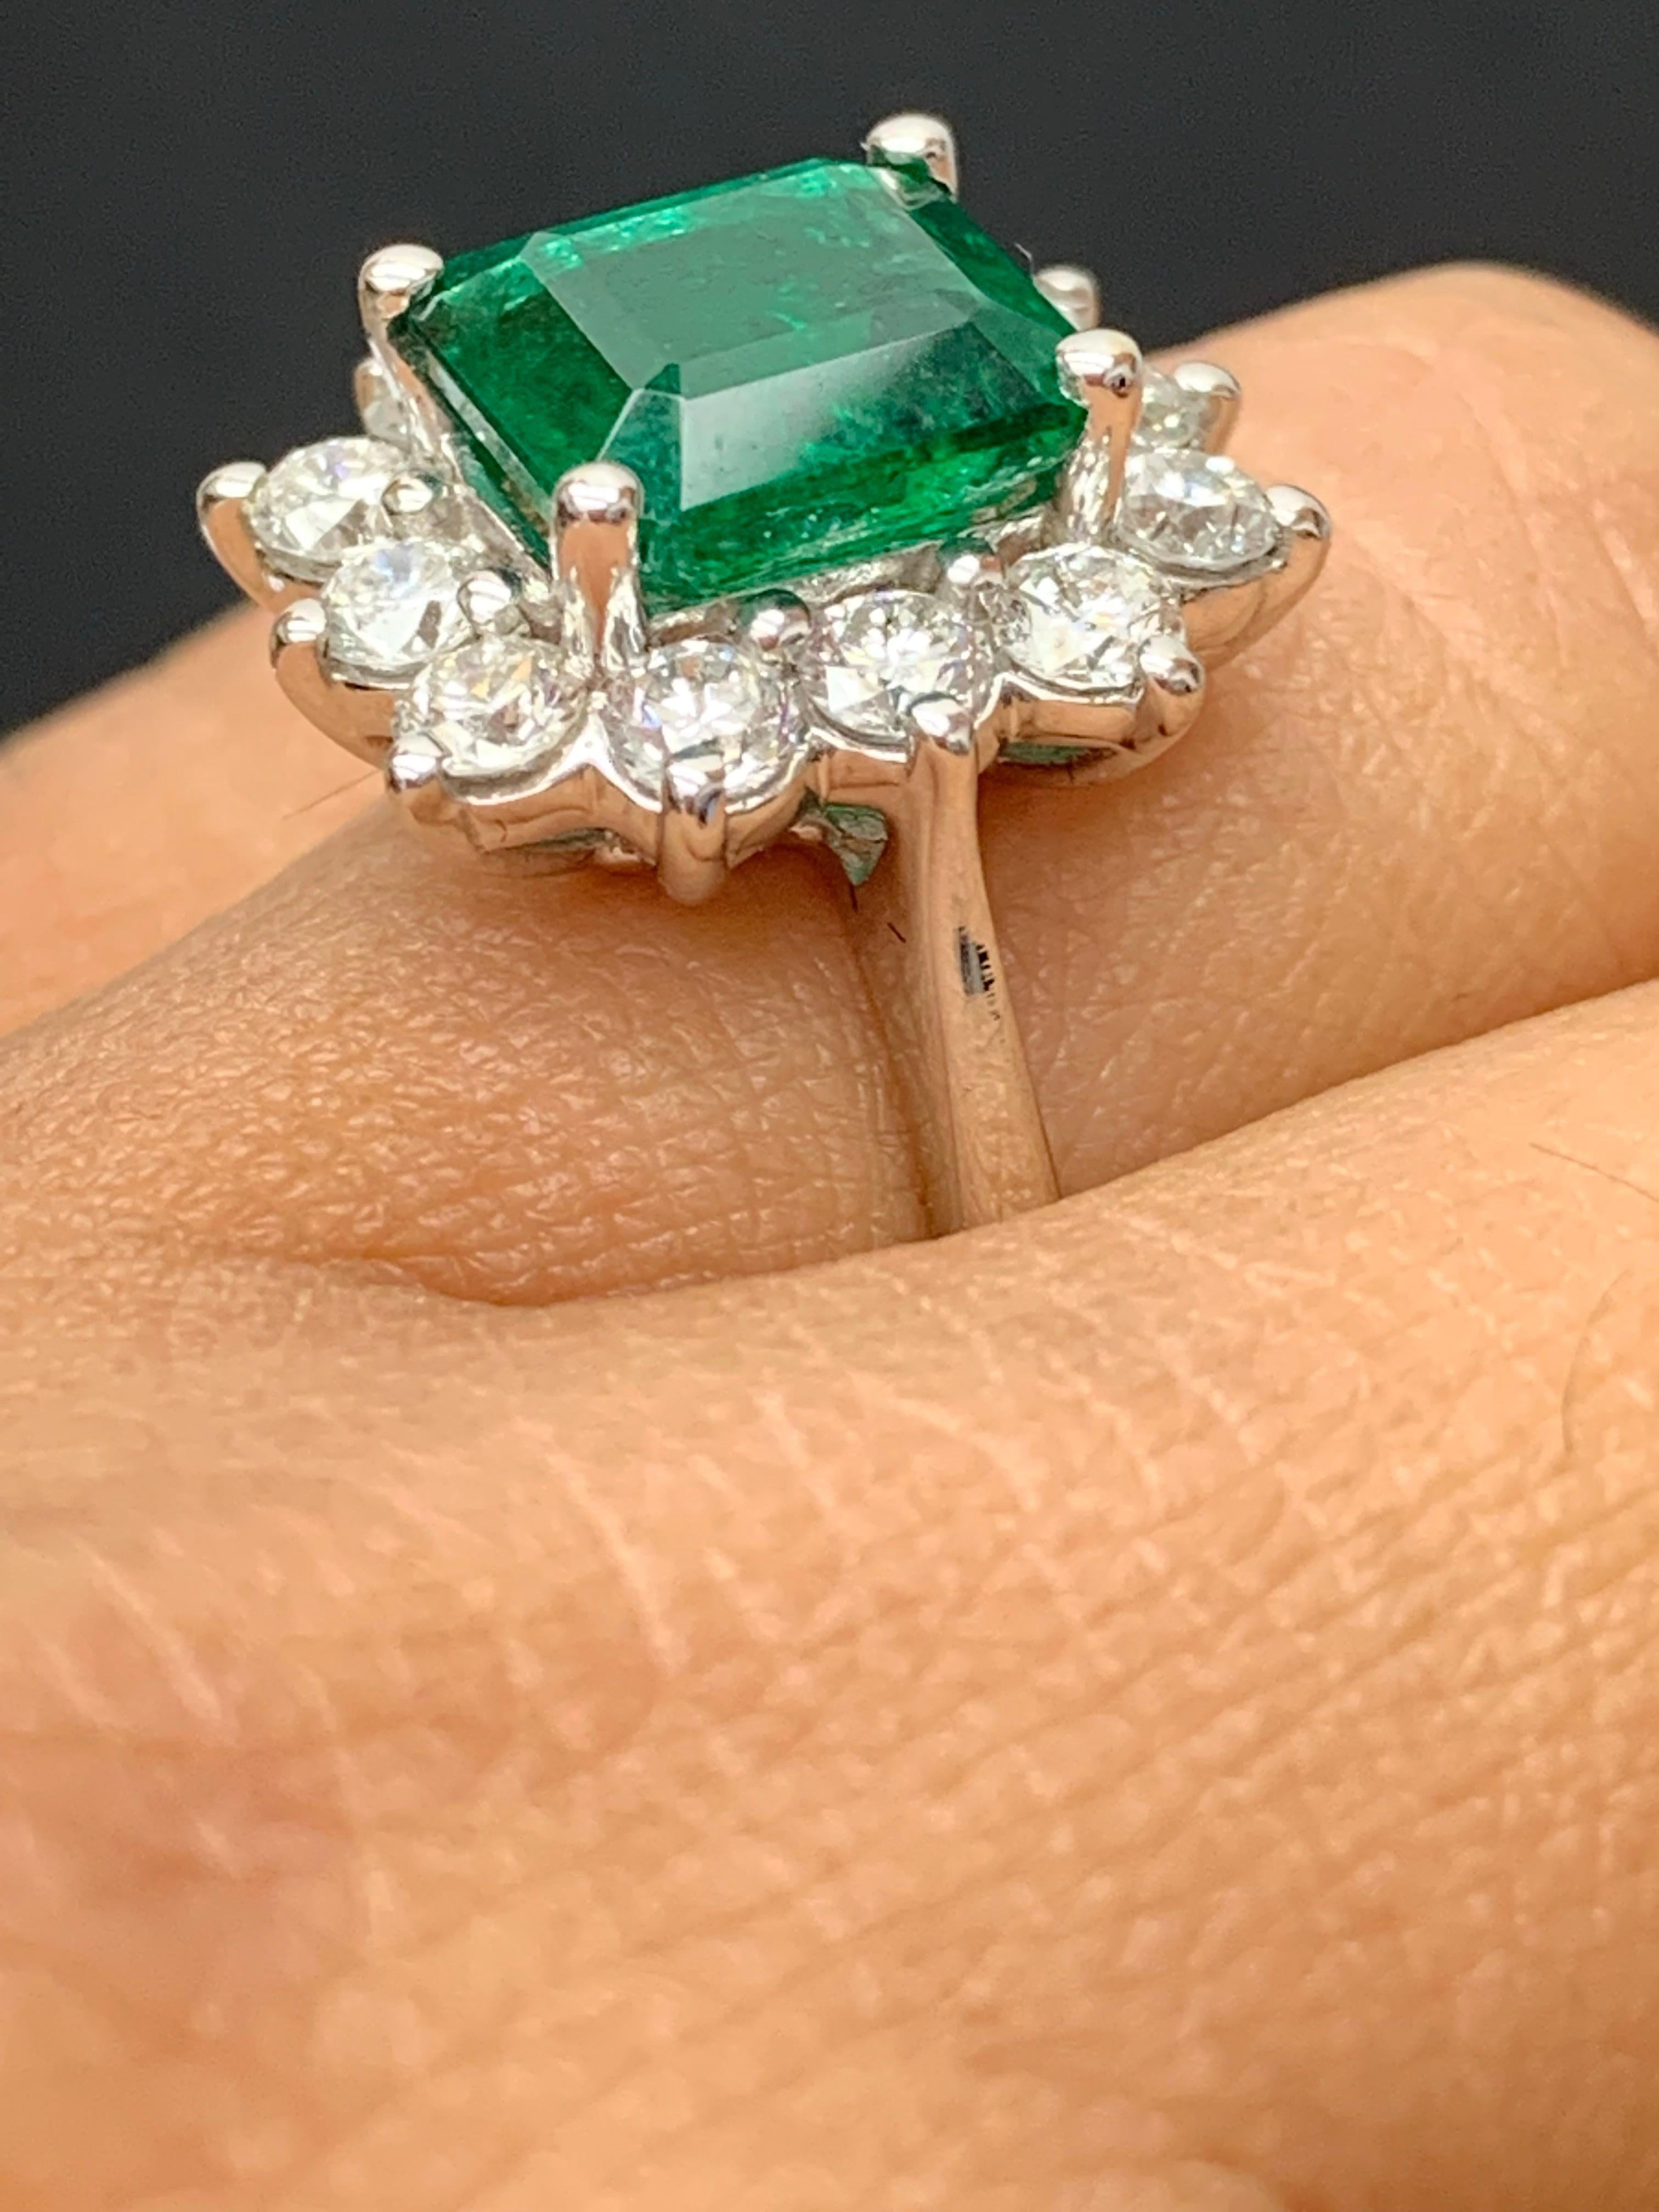 Certified 3.17 Carat Emerald Cut Emerald Diamond Ring in 14K White Gold For Sale 8